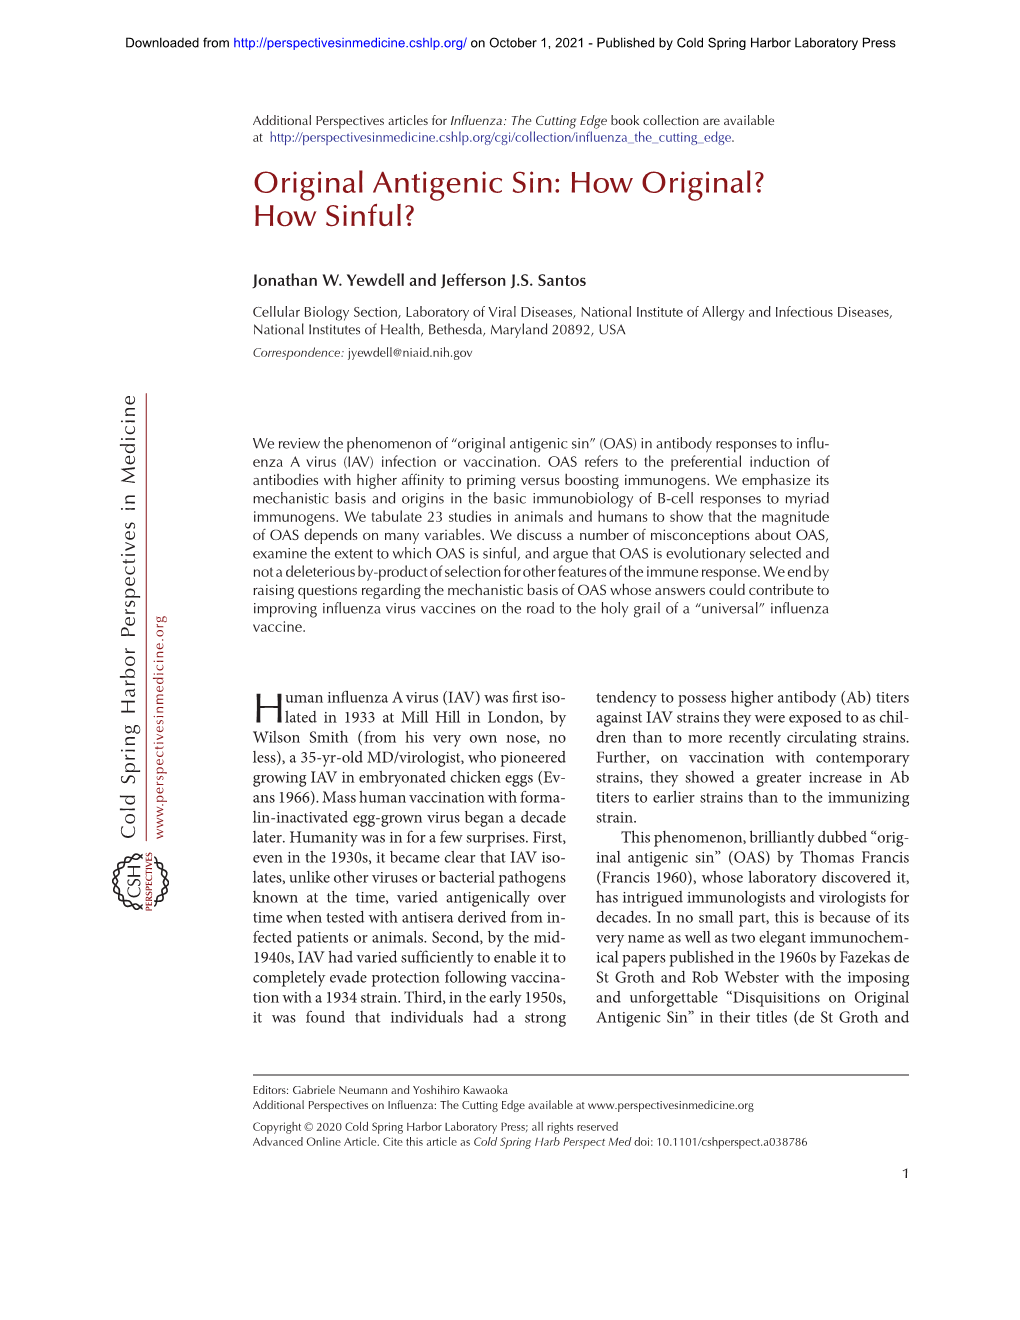 Original Antigenic Sin: How Original? How Sinful?